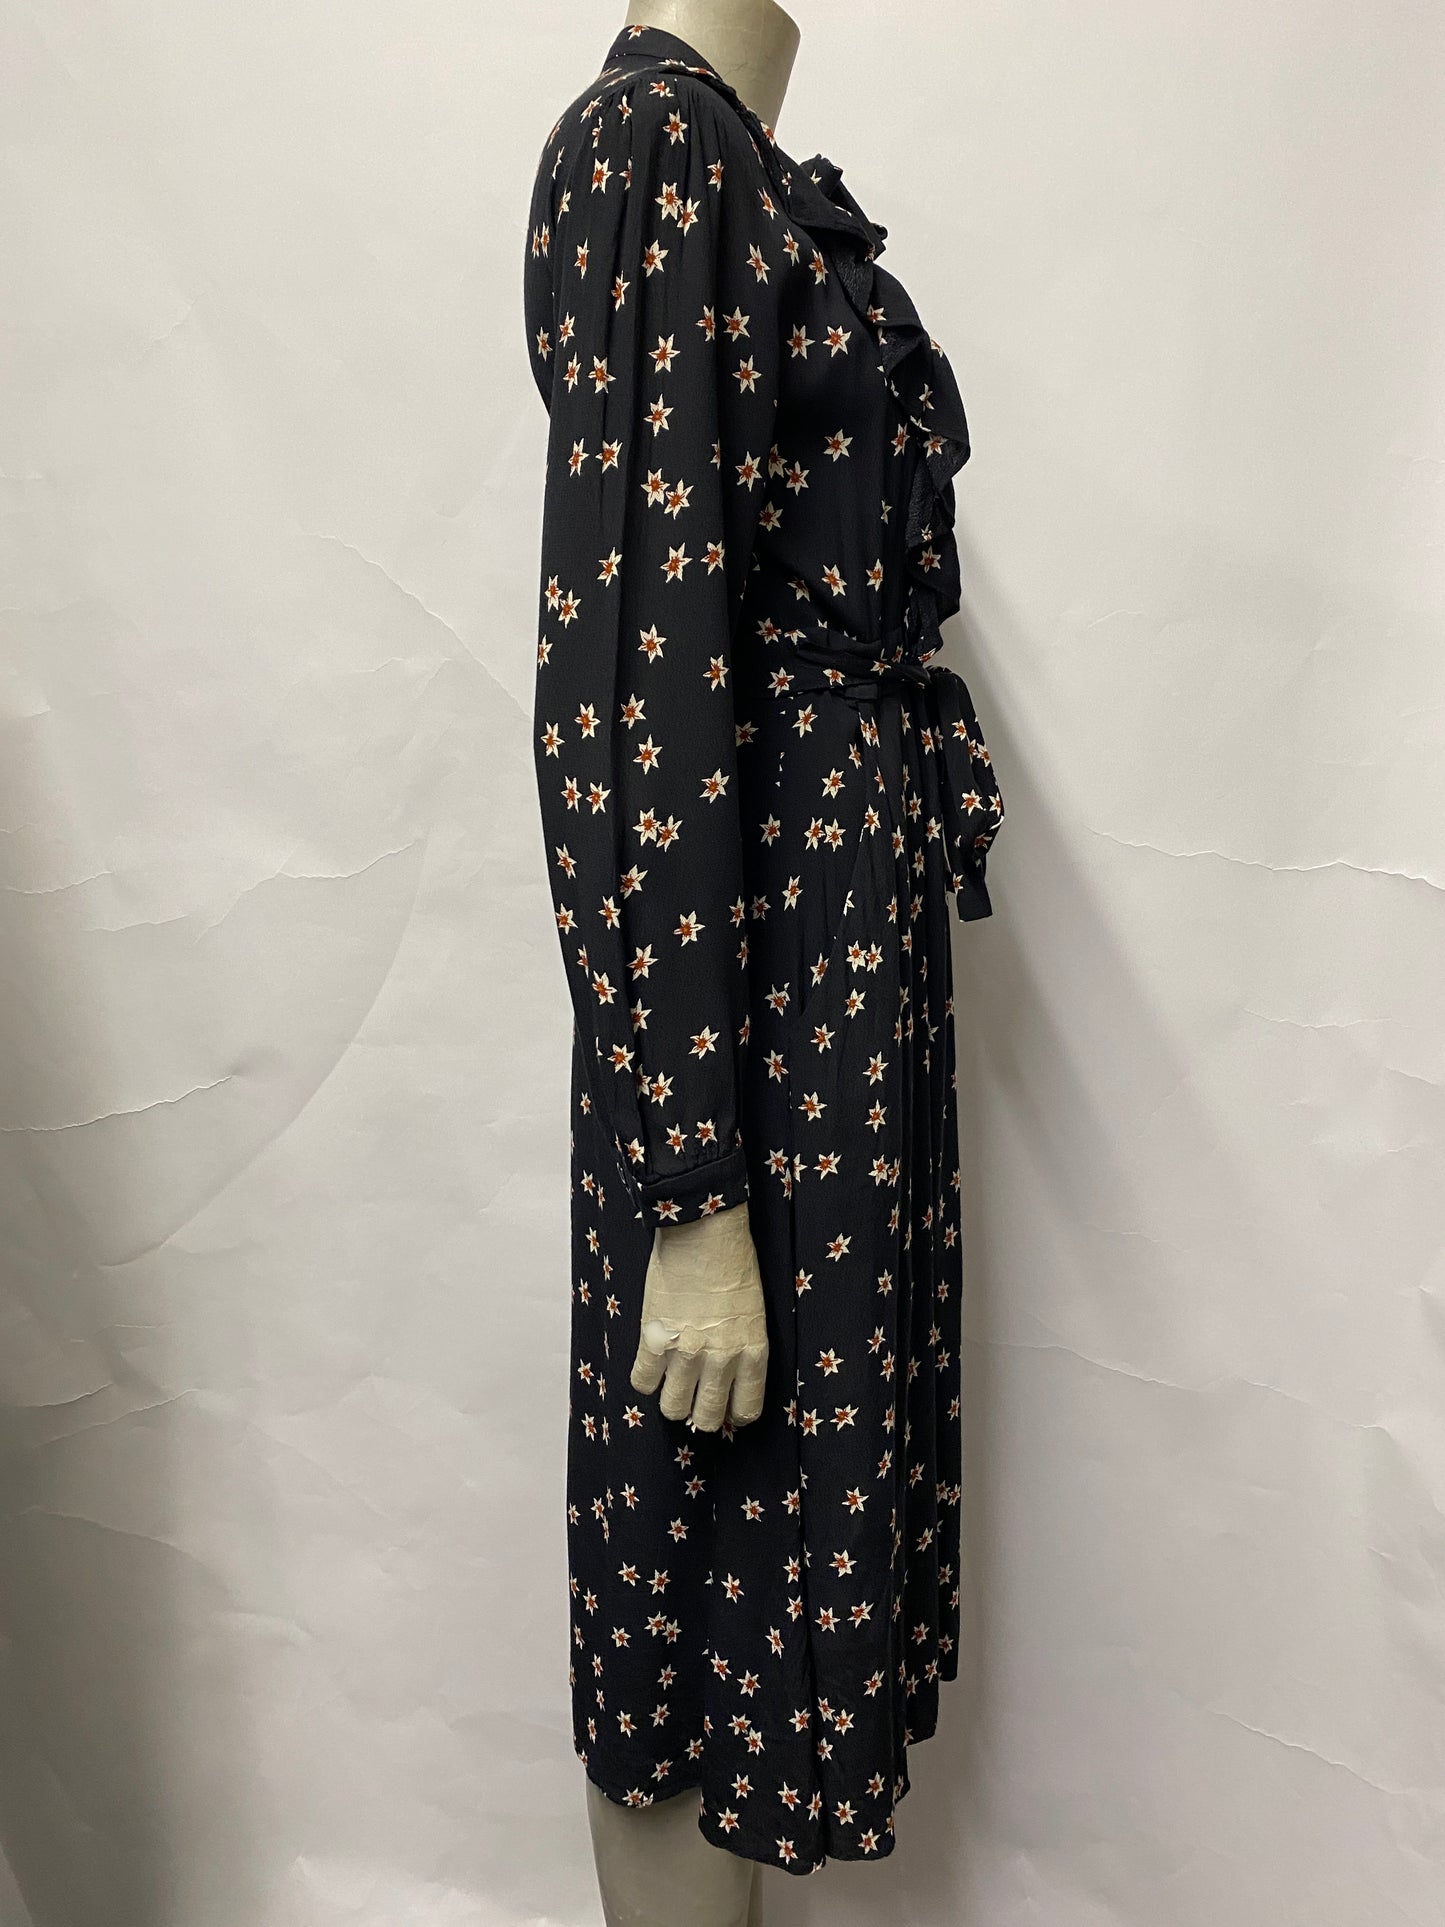 & Other Stories Black Floral Print Ruffle Midi Dress 6